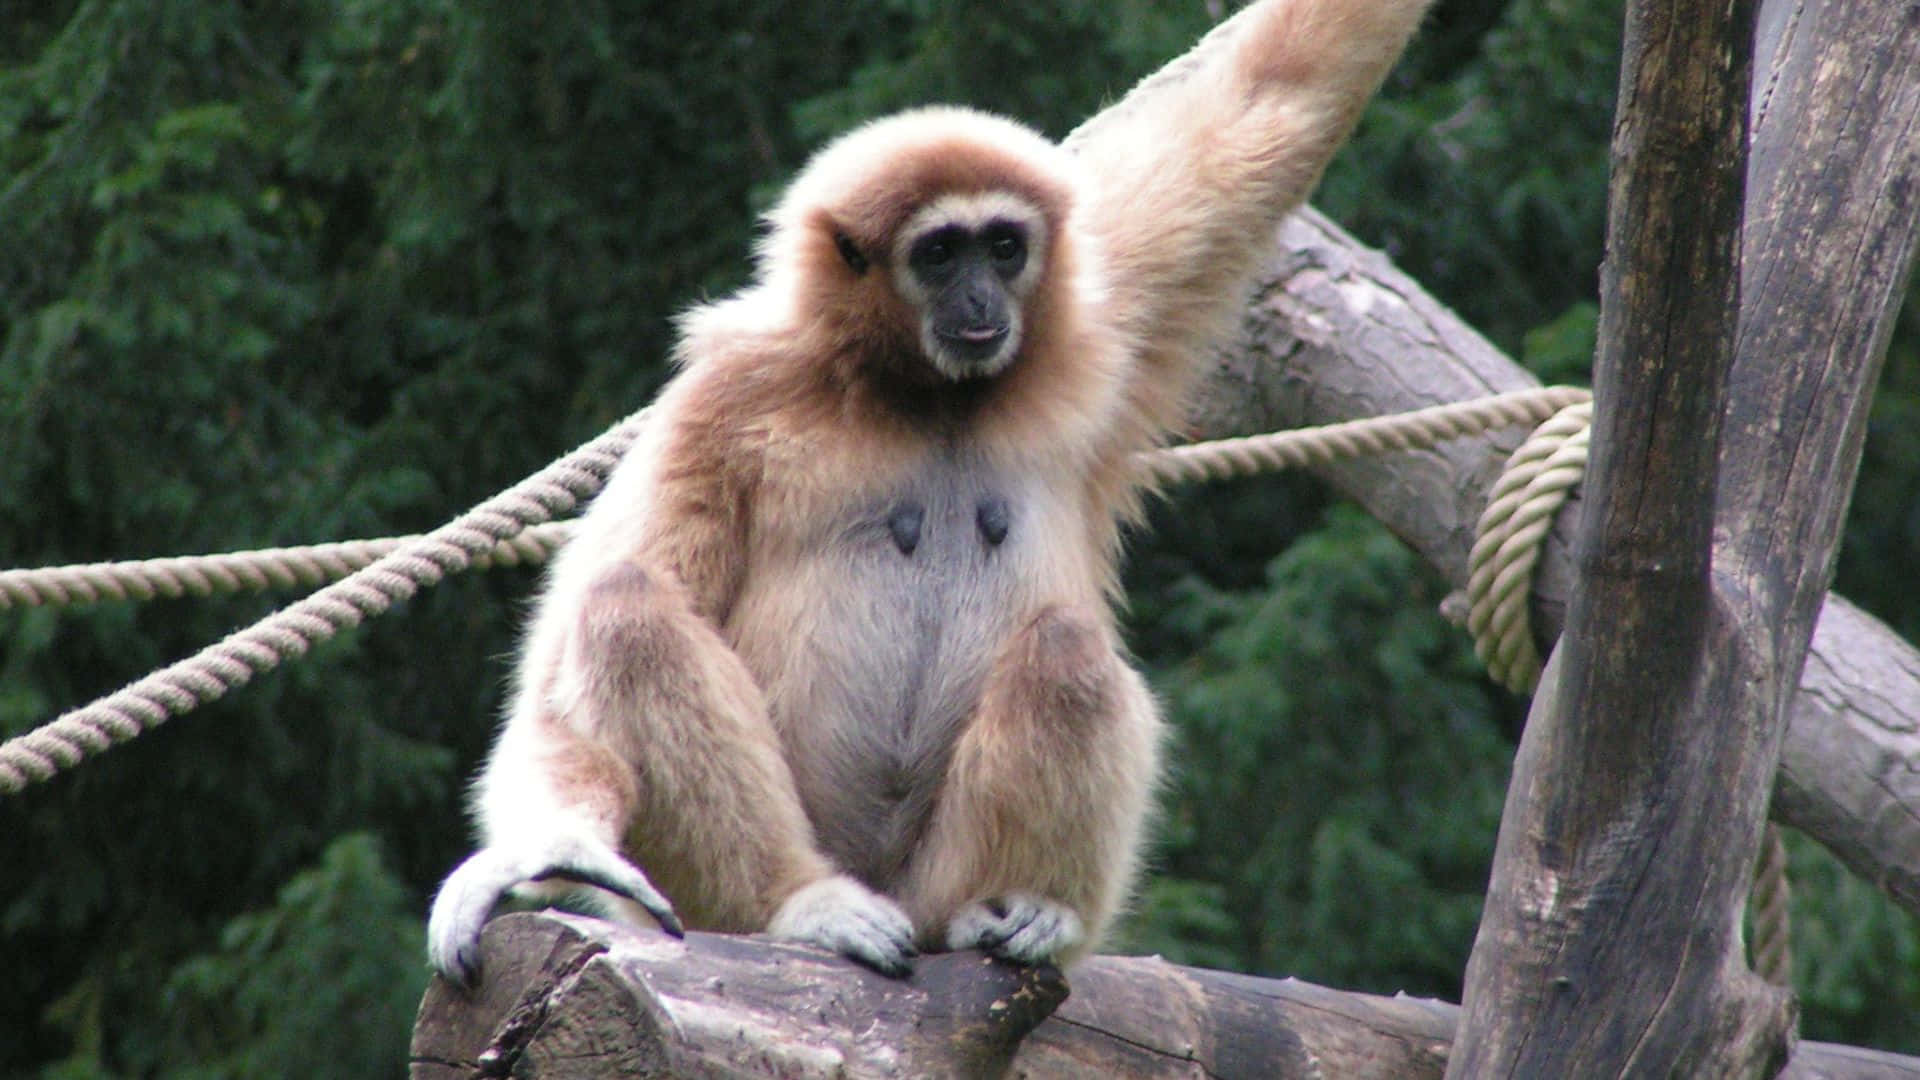 En1080p Gibbon Lever I Sin Naturliga Livsmiljö